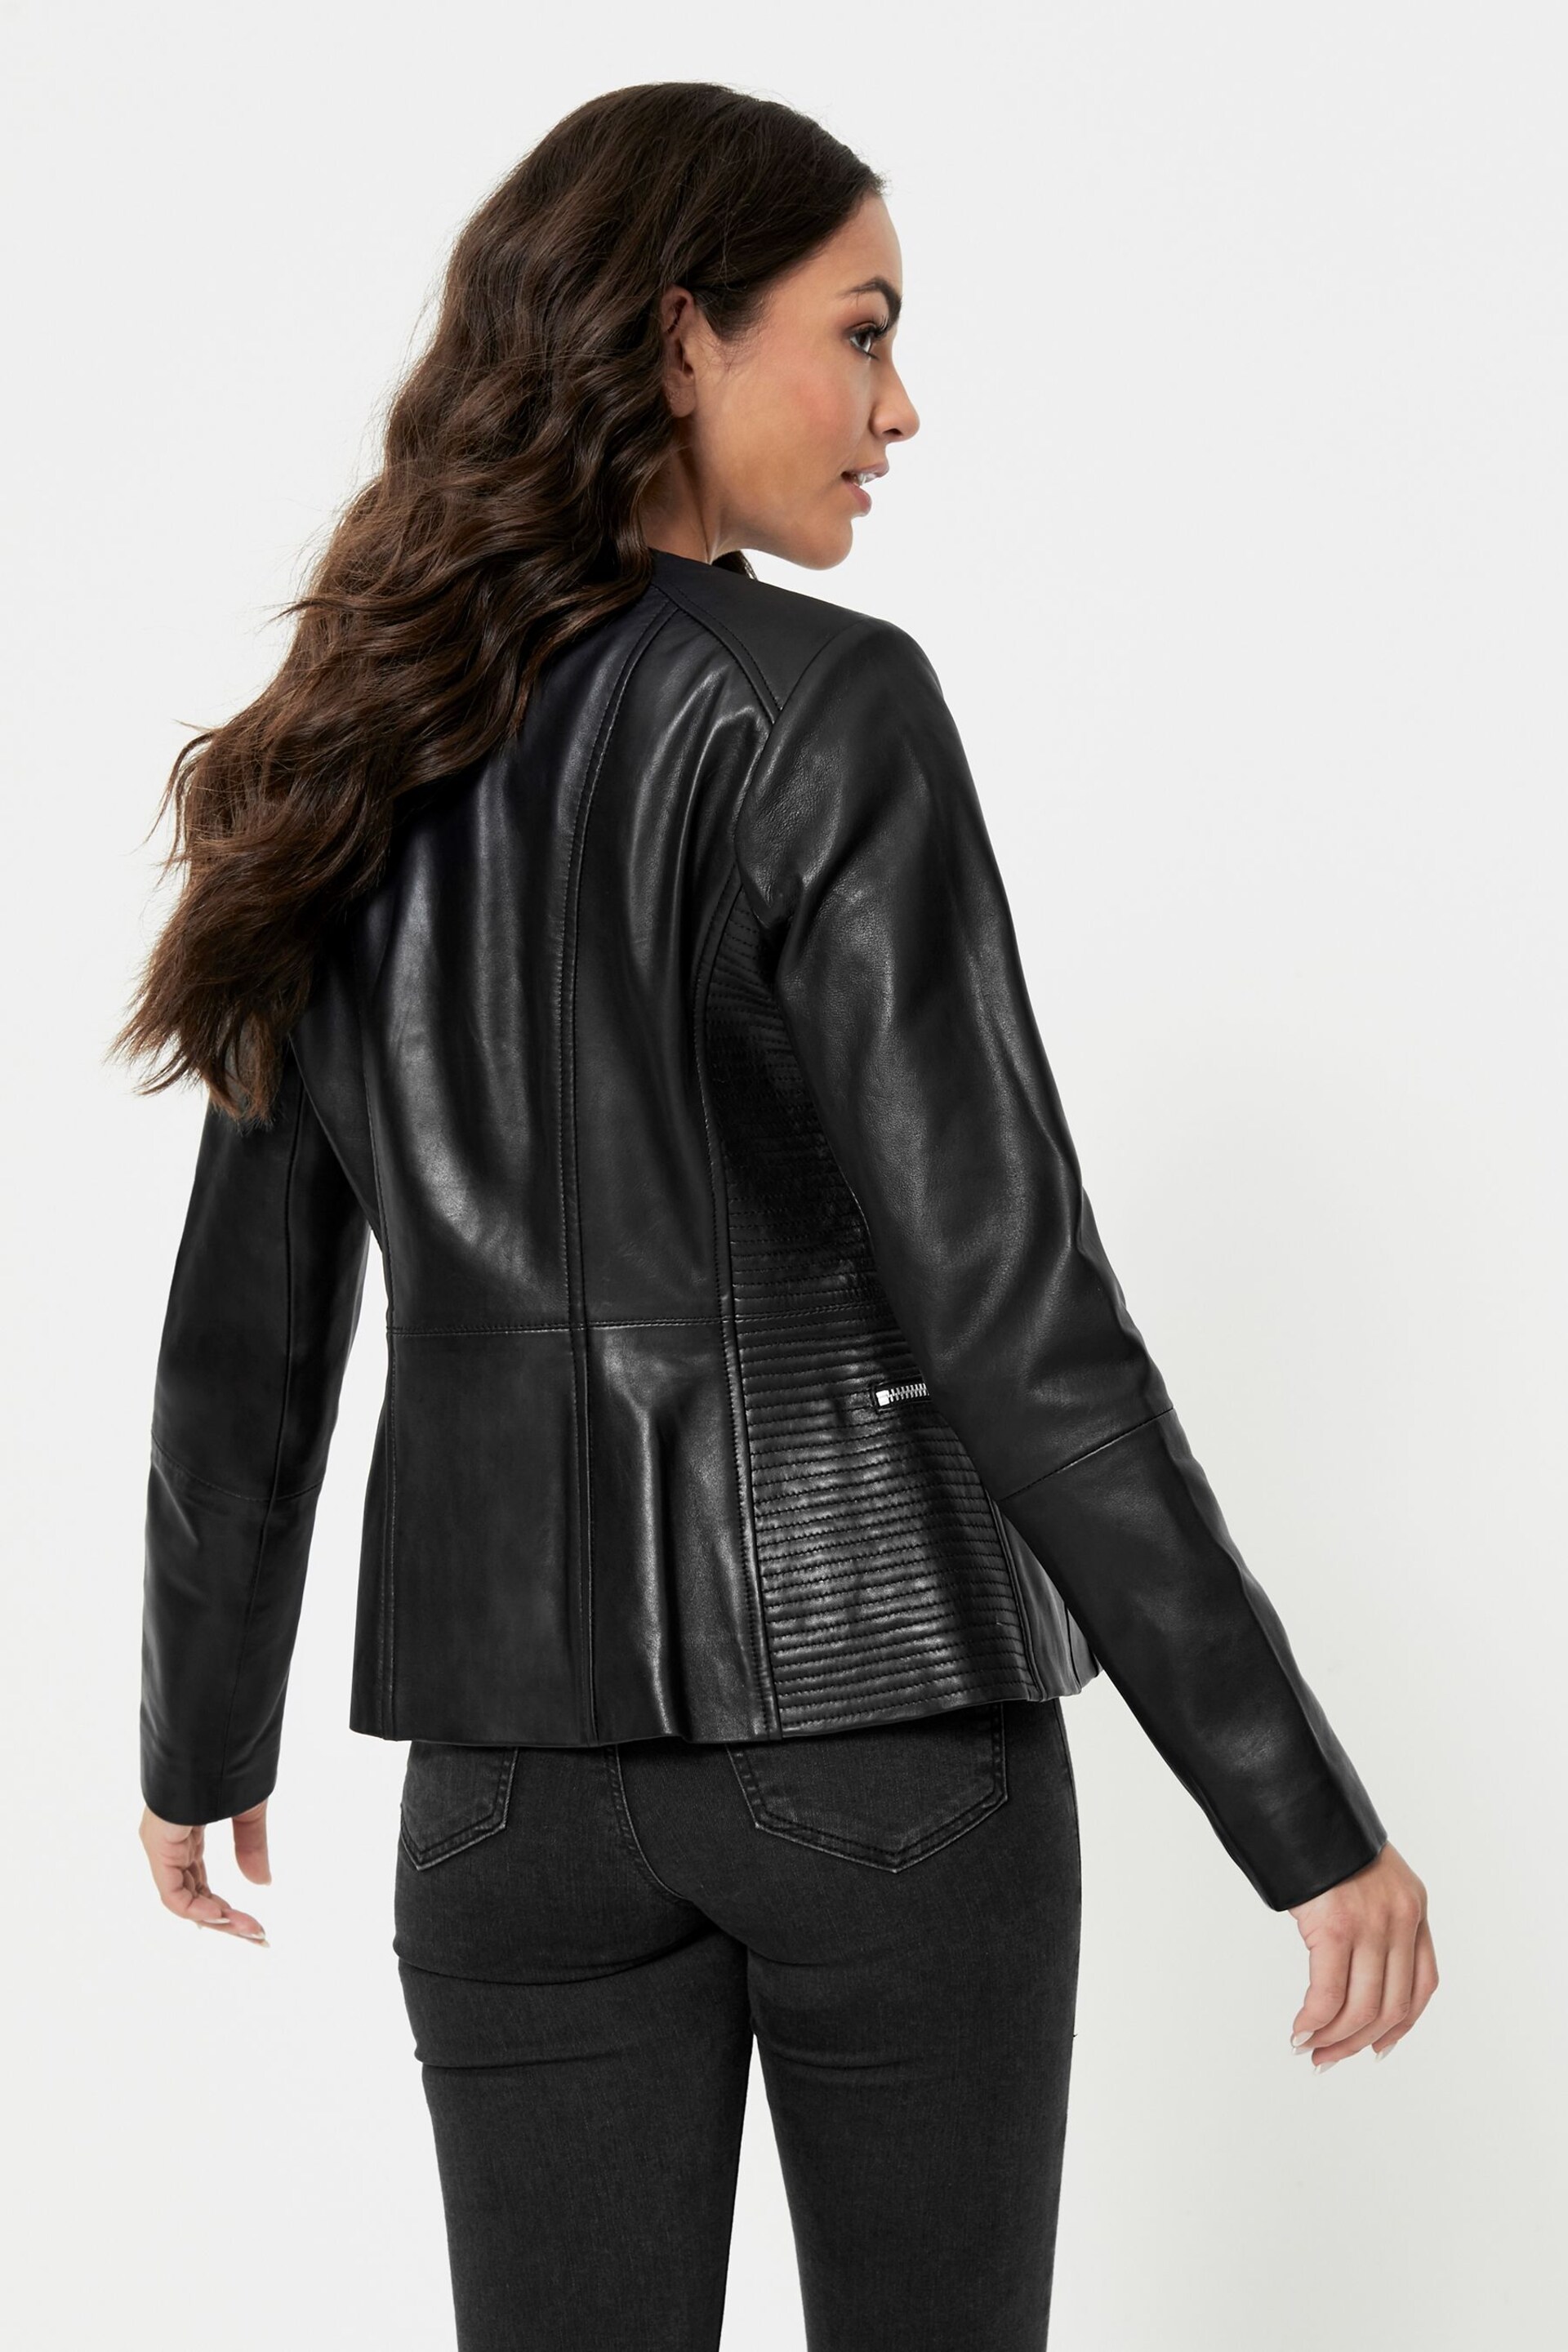 Urban Code Black Collarless Leather Jacket - Image 2 of 4